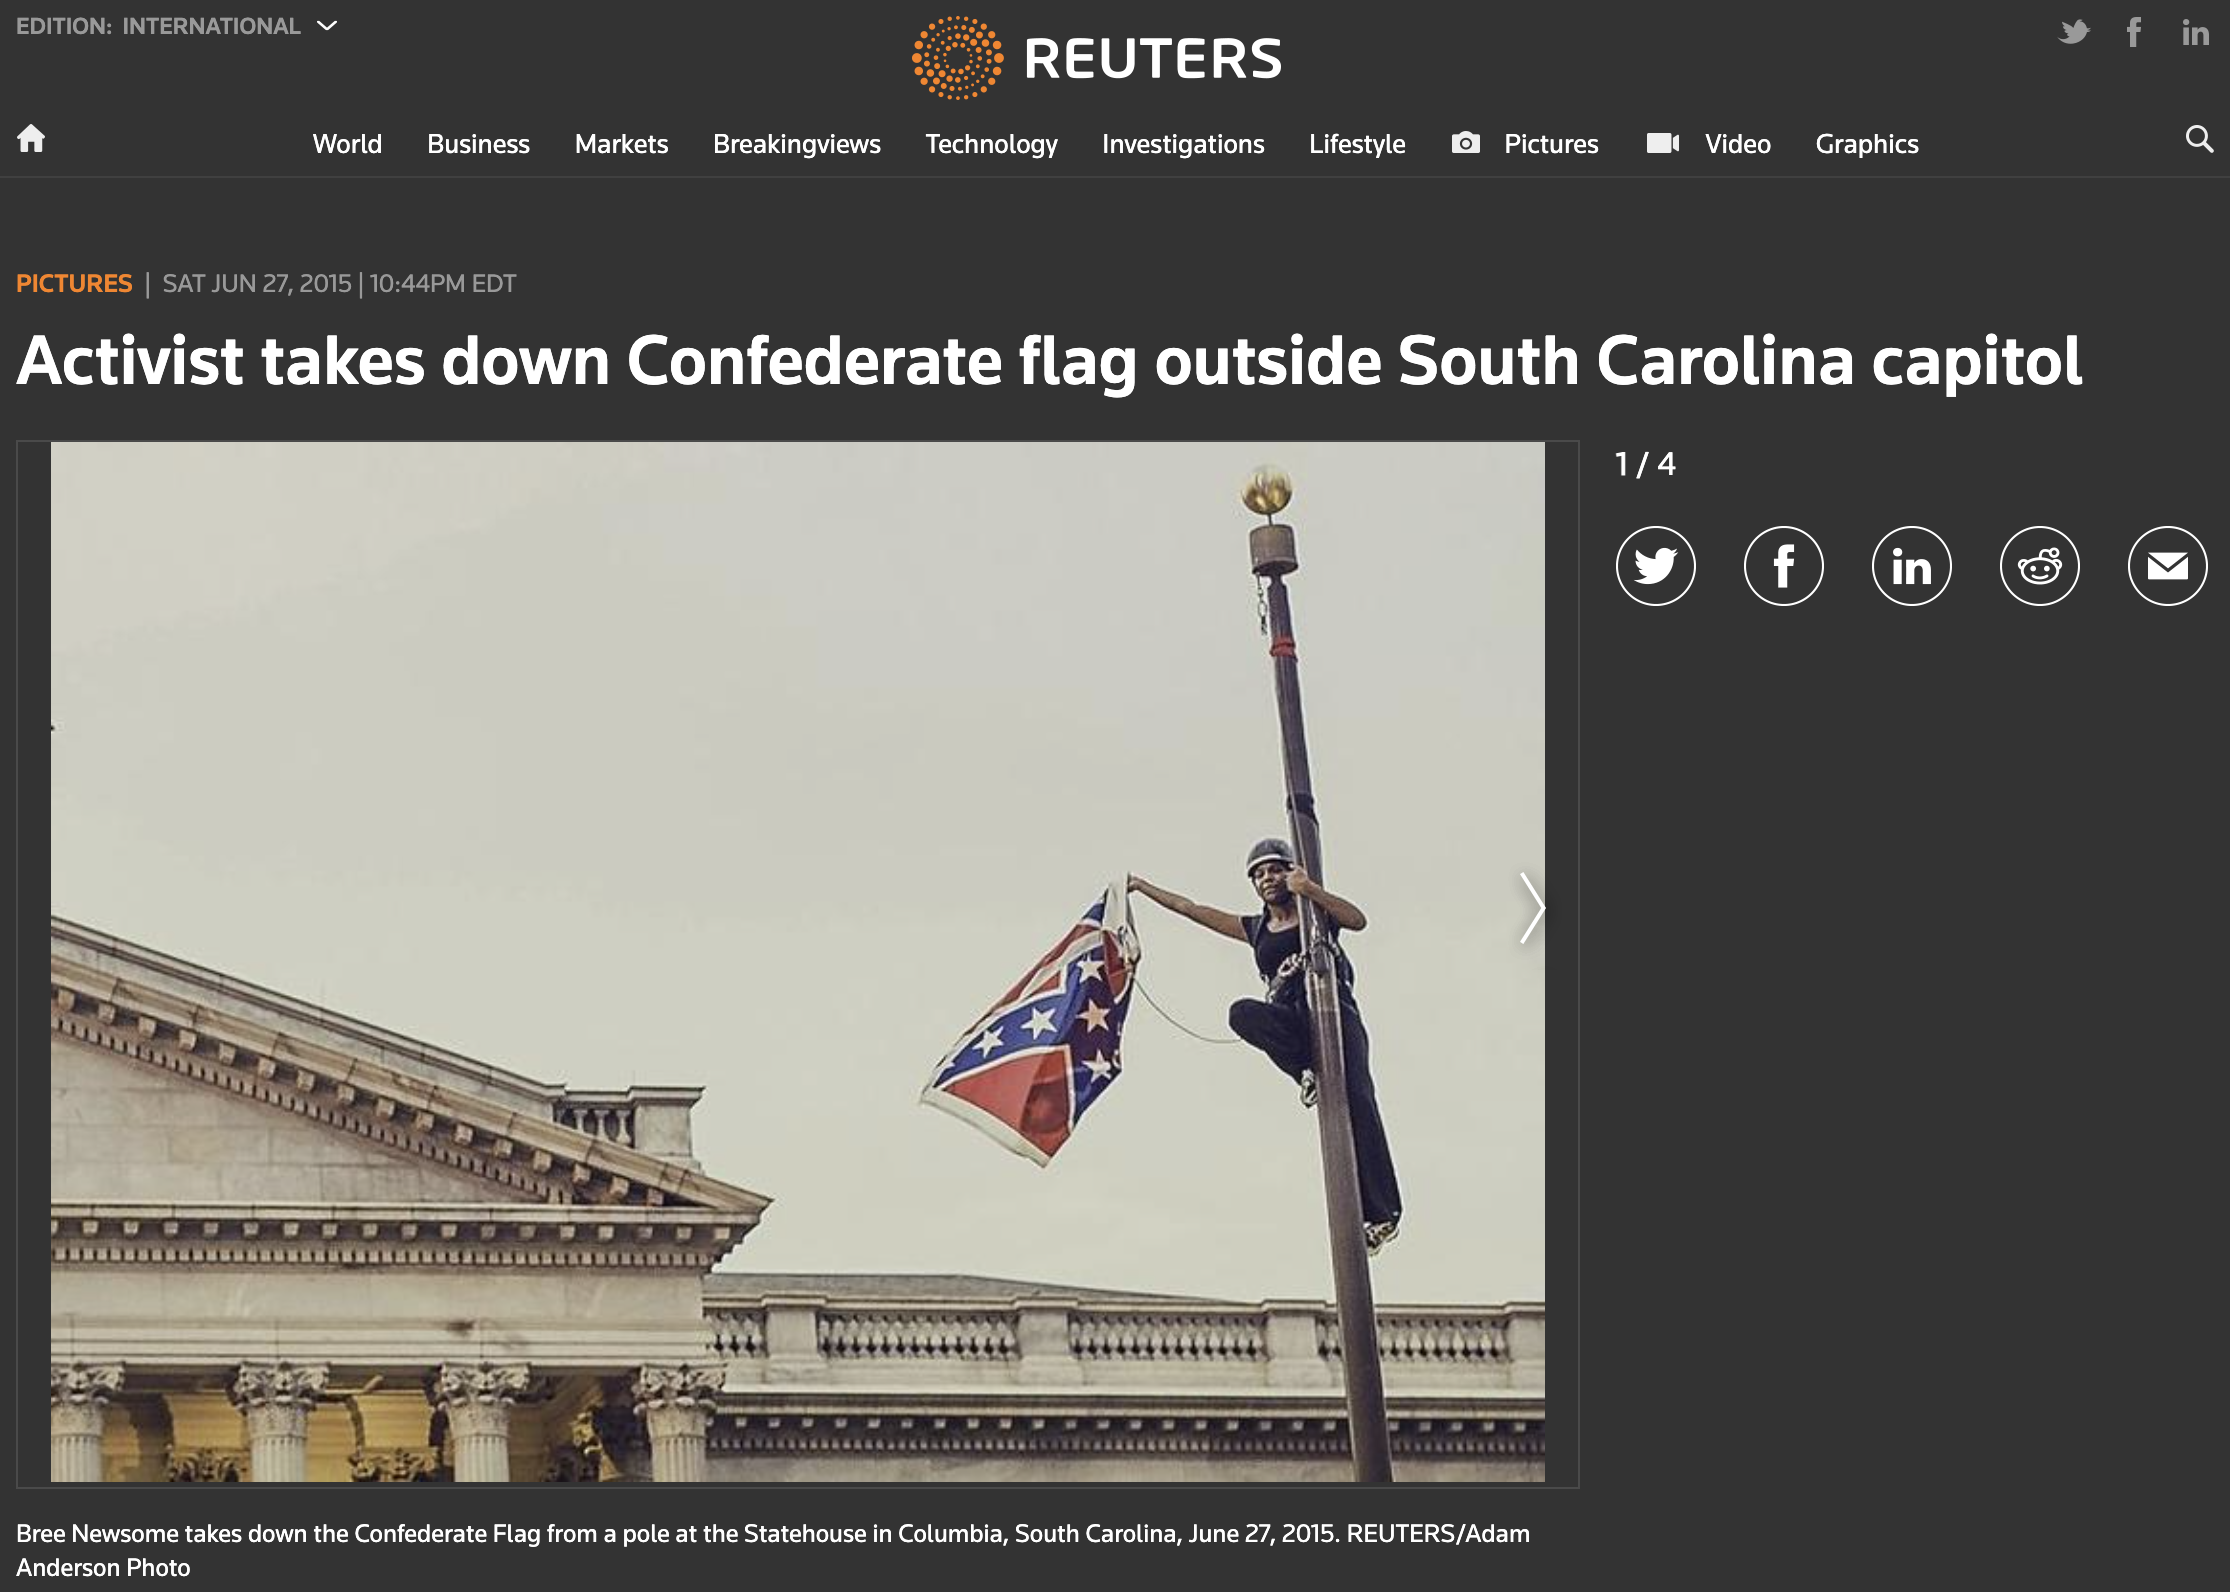 <em>Activist takes down Confederate flag outside South Carolina capitol</em>, Reuters/Adam Anderson Photo, June 27, 2015